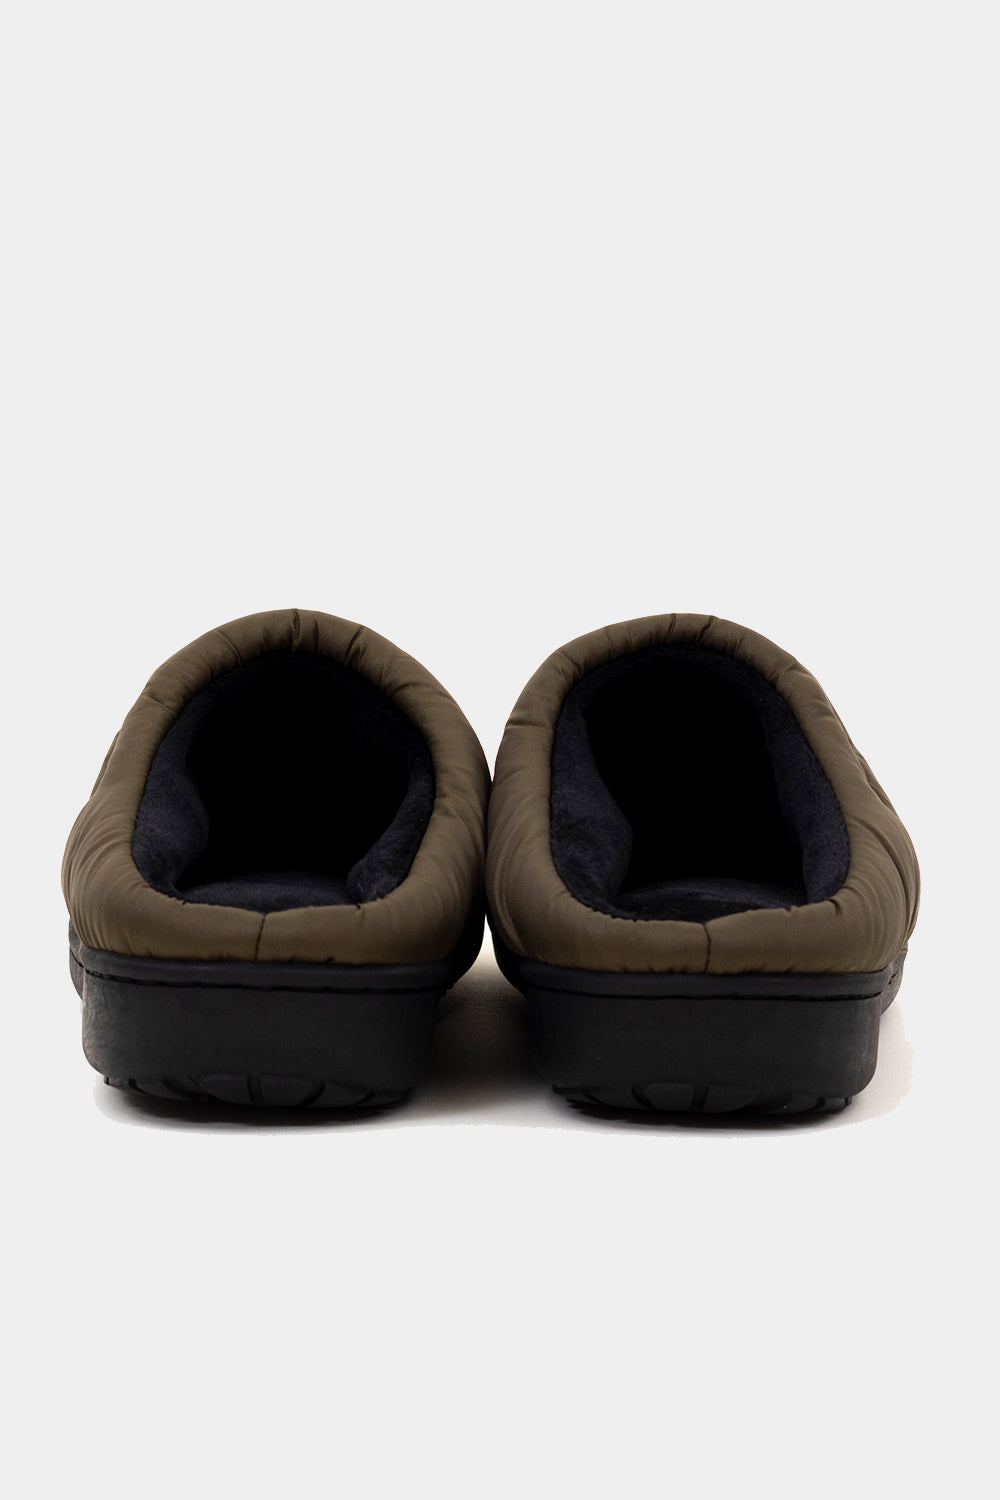 SUBU Indoor Outdoor Slippers (Mountain Khaki) | Number Six